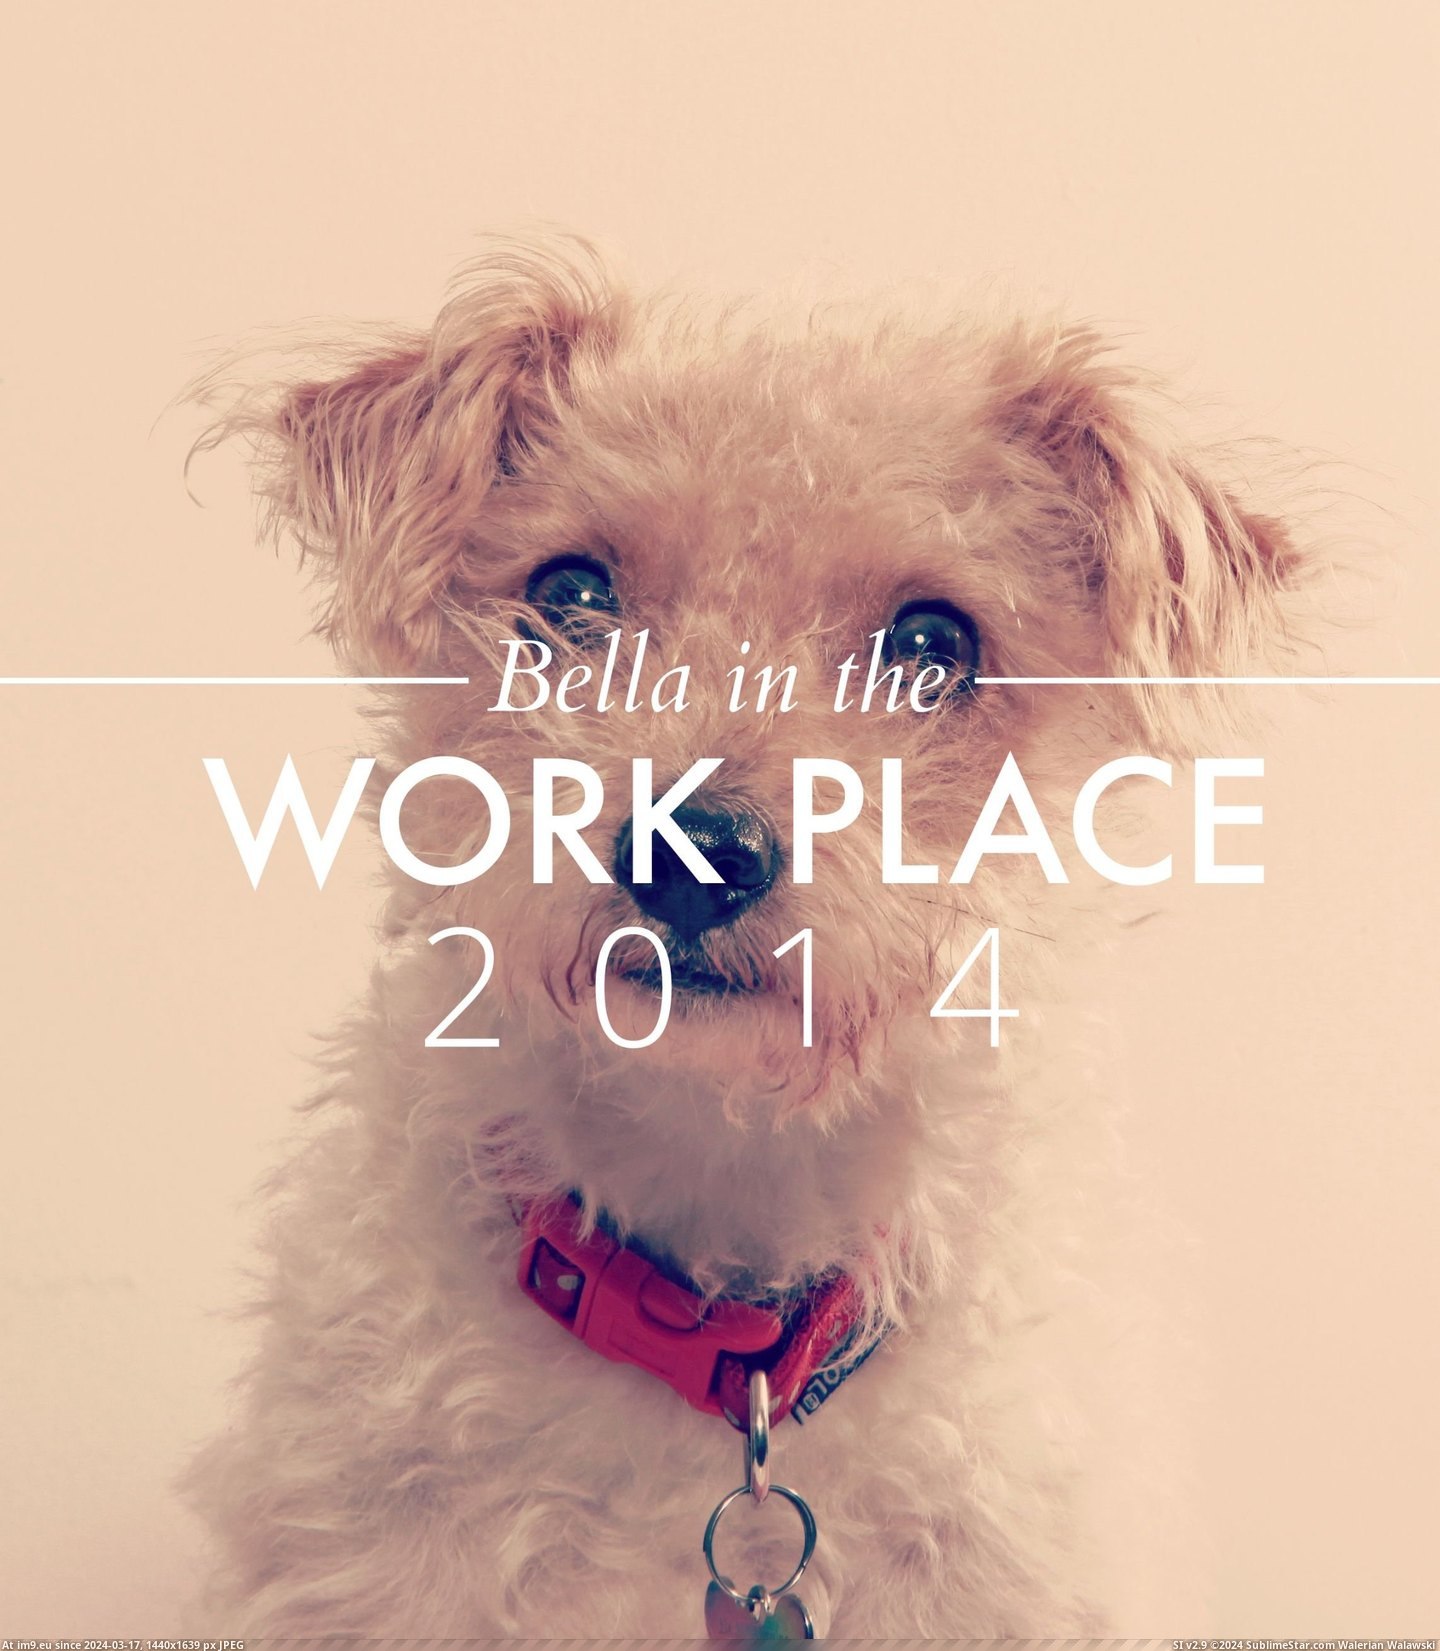 #For #Year #Dog #Calendar #Bella #Workplace #Christmas #Family #Called [Aww] Every Christmas I make a calendar of my dog for my family. This year's calendar is called 'Bella in the Workplace 2014'. I Pic. (Image of album My r/AWW favs))